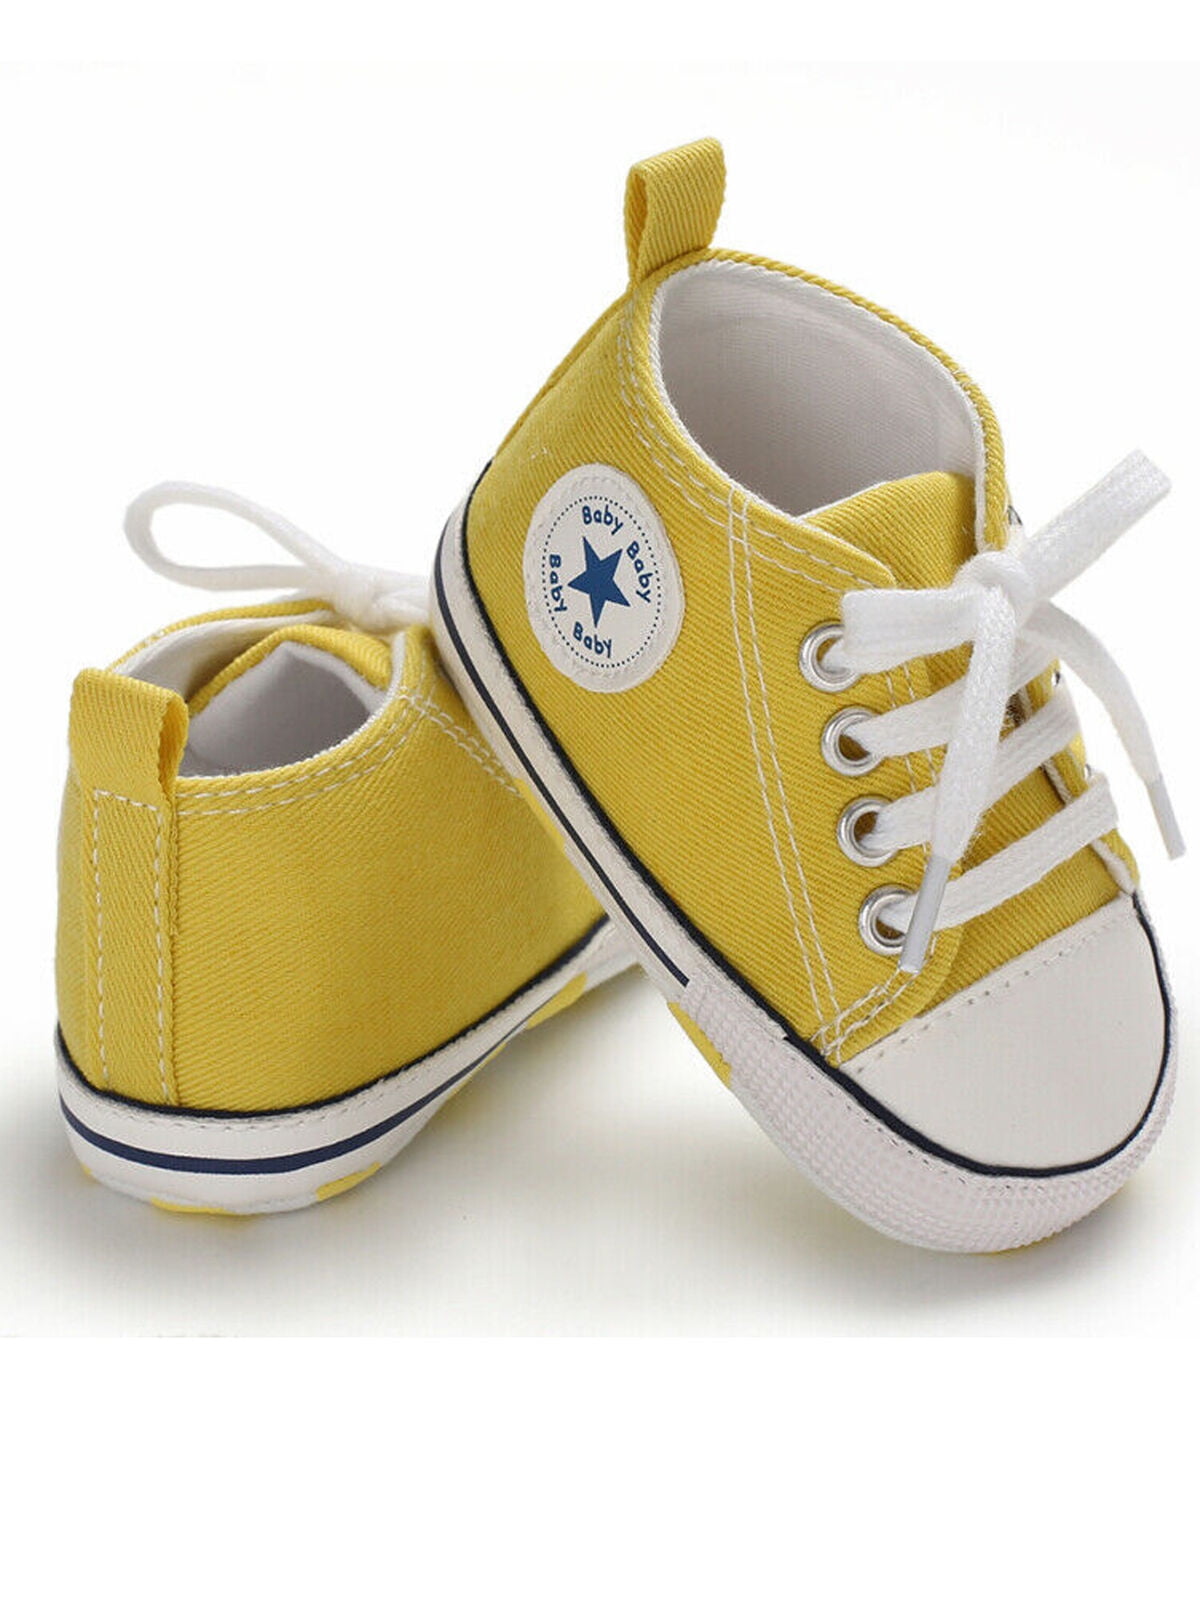 Yellow Boys Shoes - Walmart.com